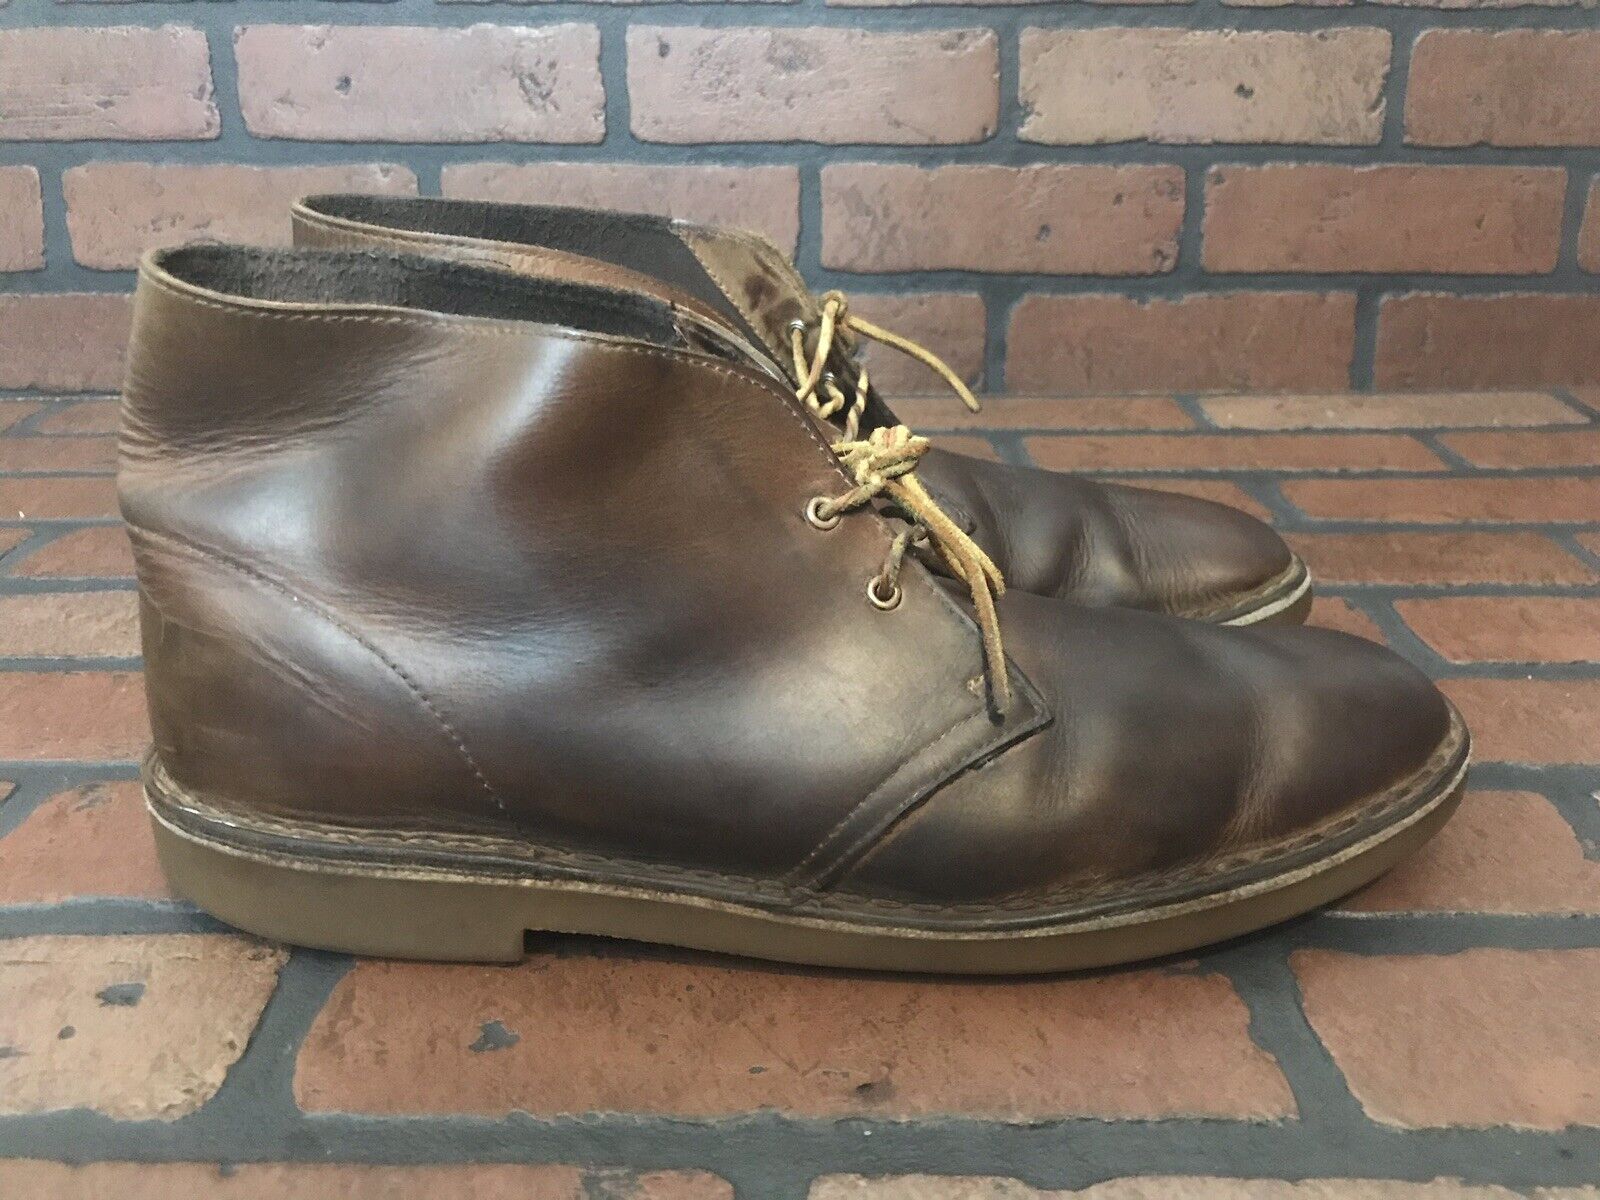 Clarks Originals Brown Leather Chukkas Desert Boots M… - Gem